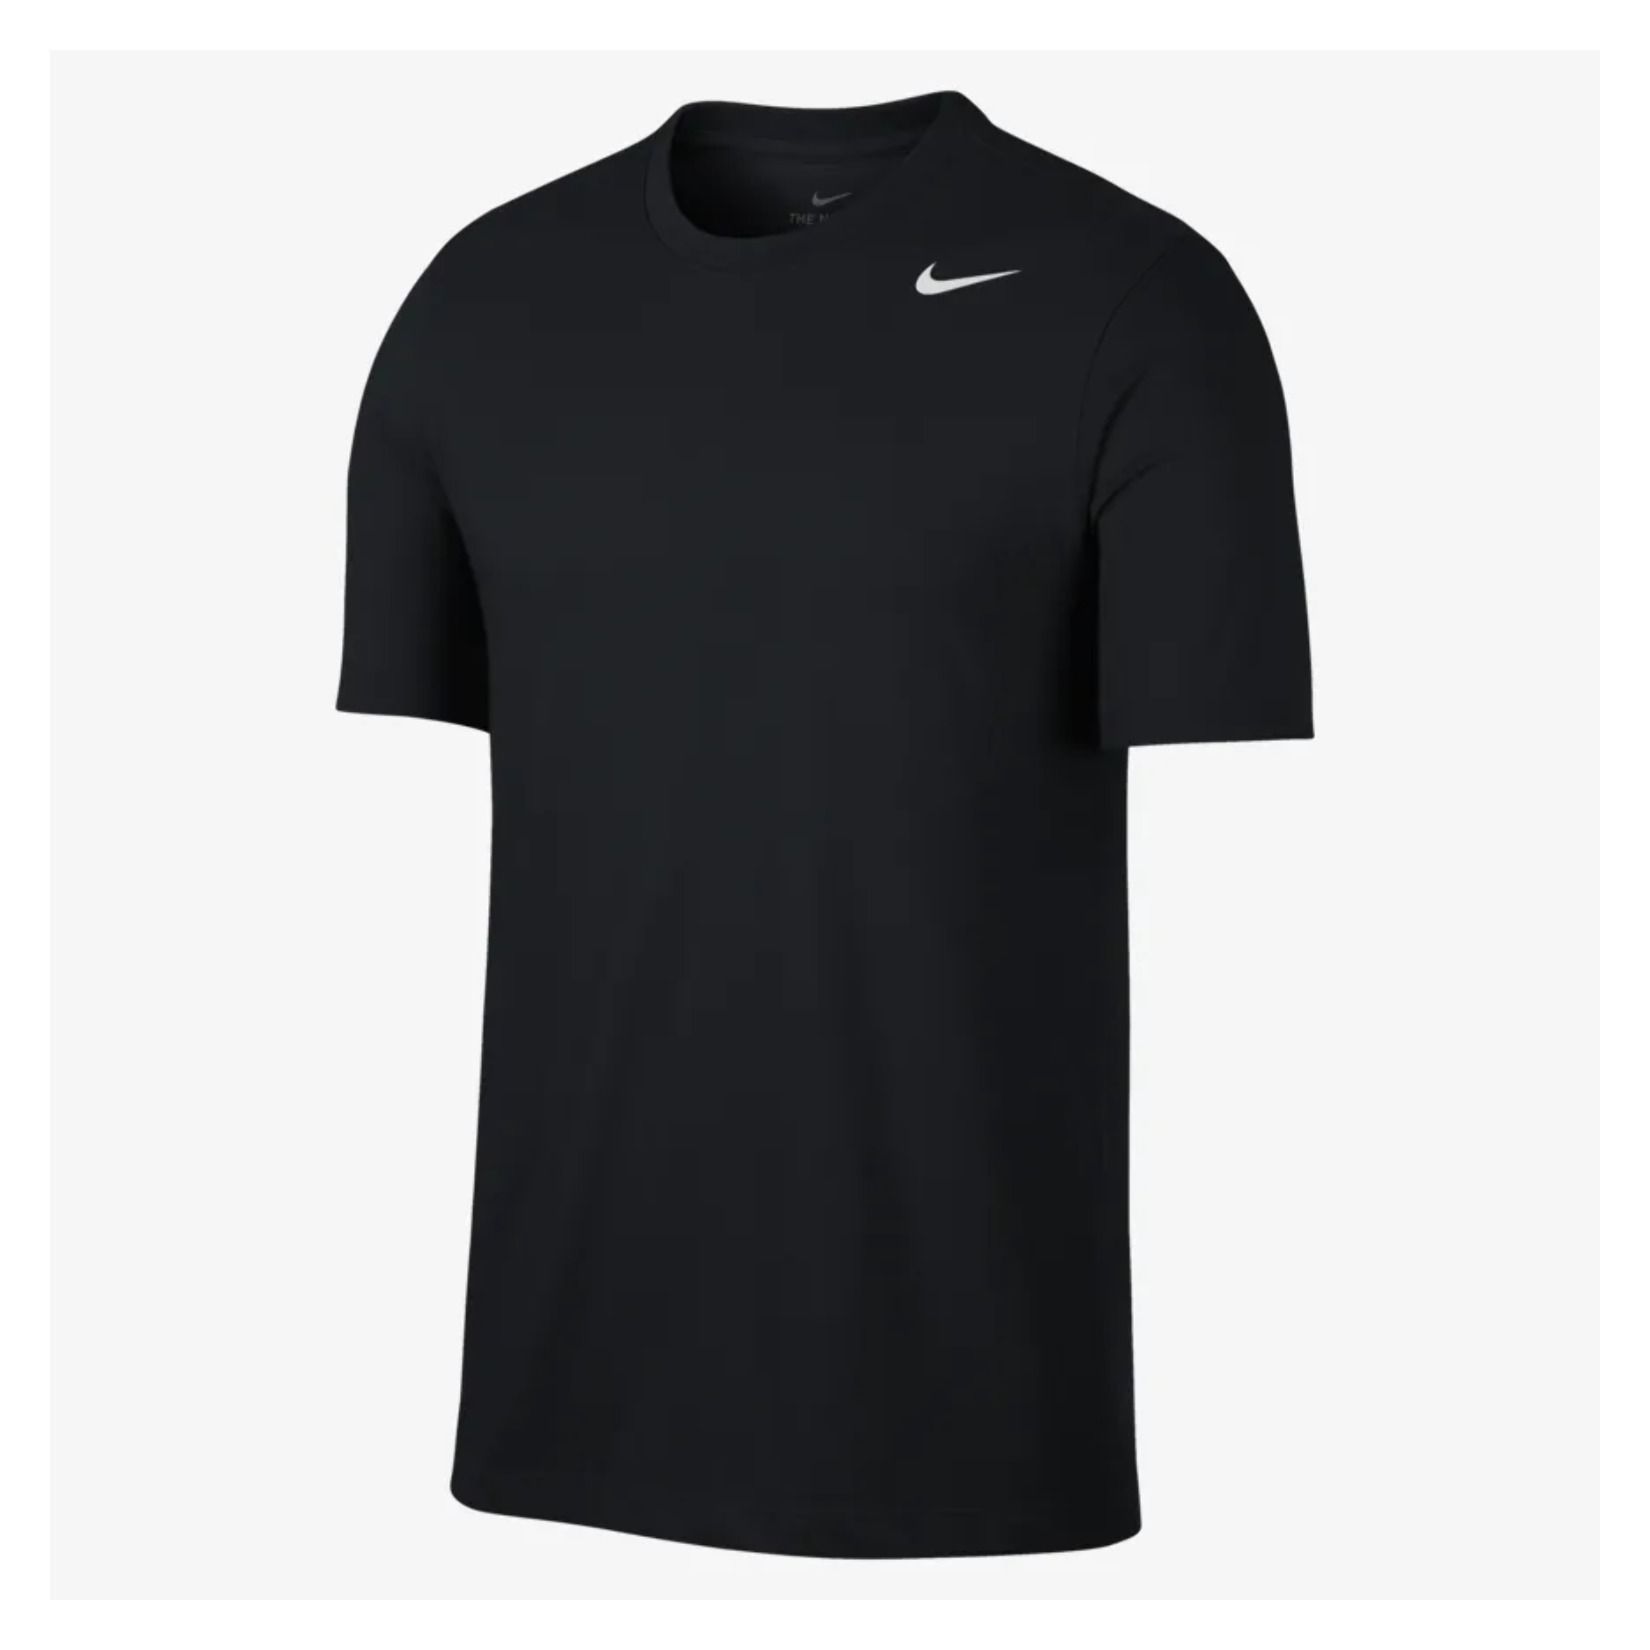 Nike Dri-FIT Training T-shirt - Kitlocker.com